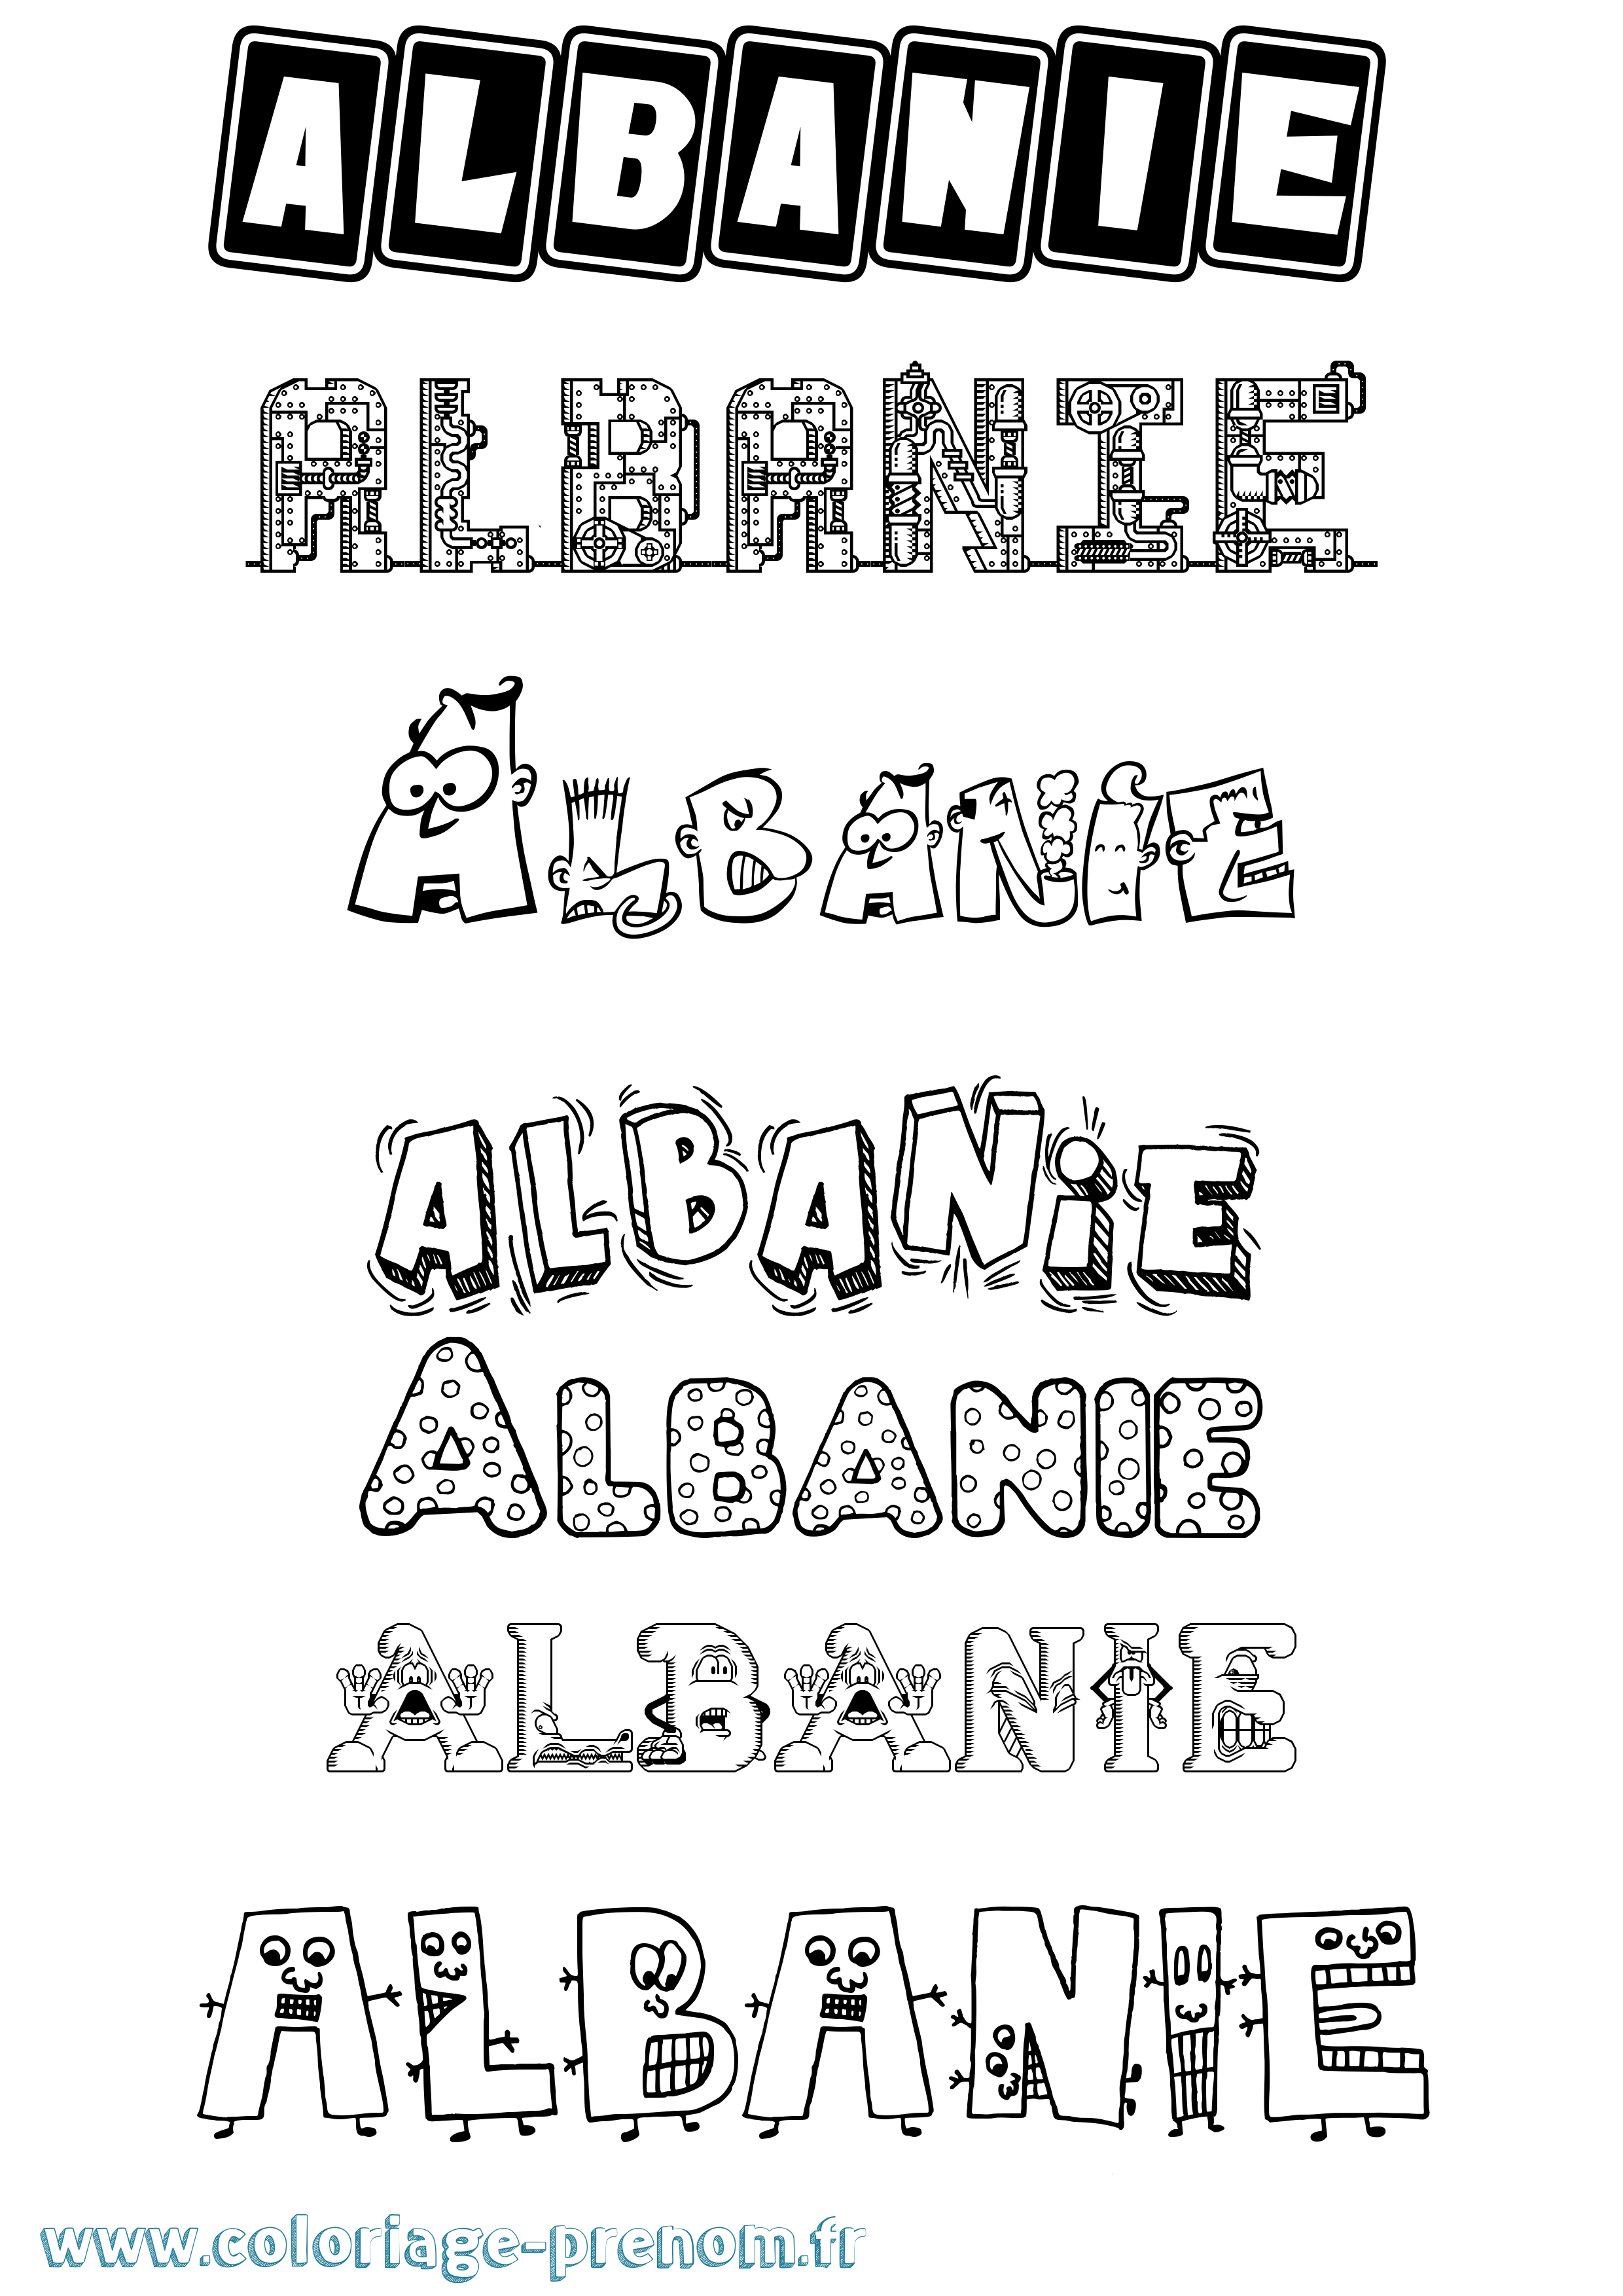 Coloriage prénom Albanie Fun